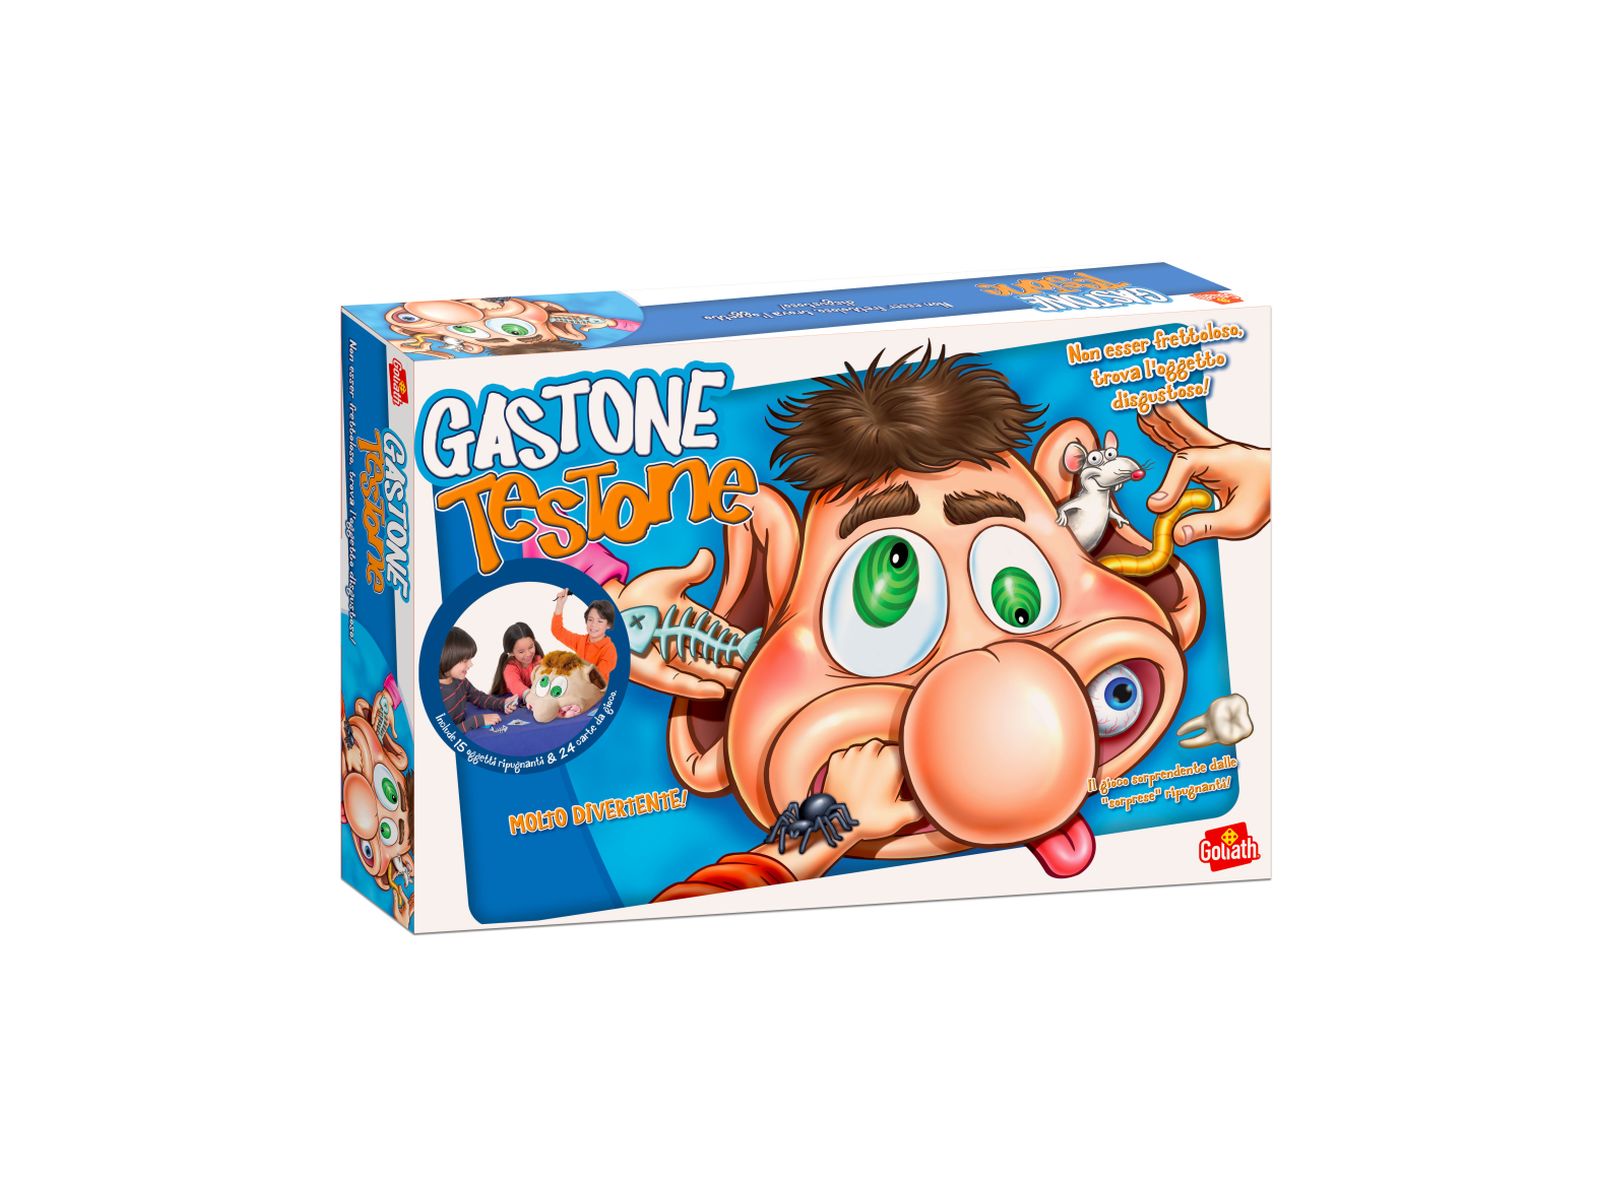 Gastone testone - 